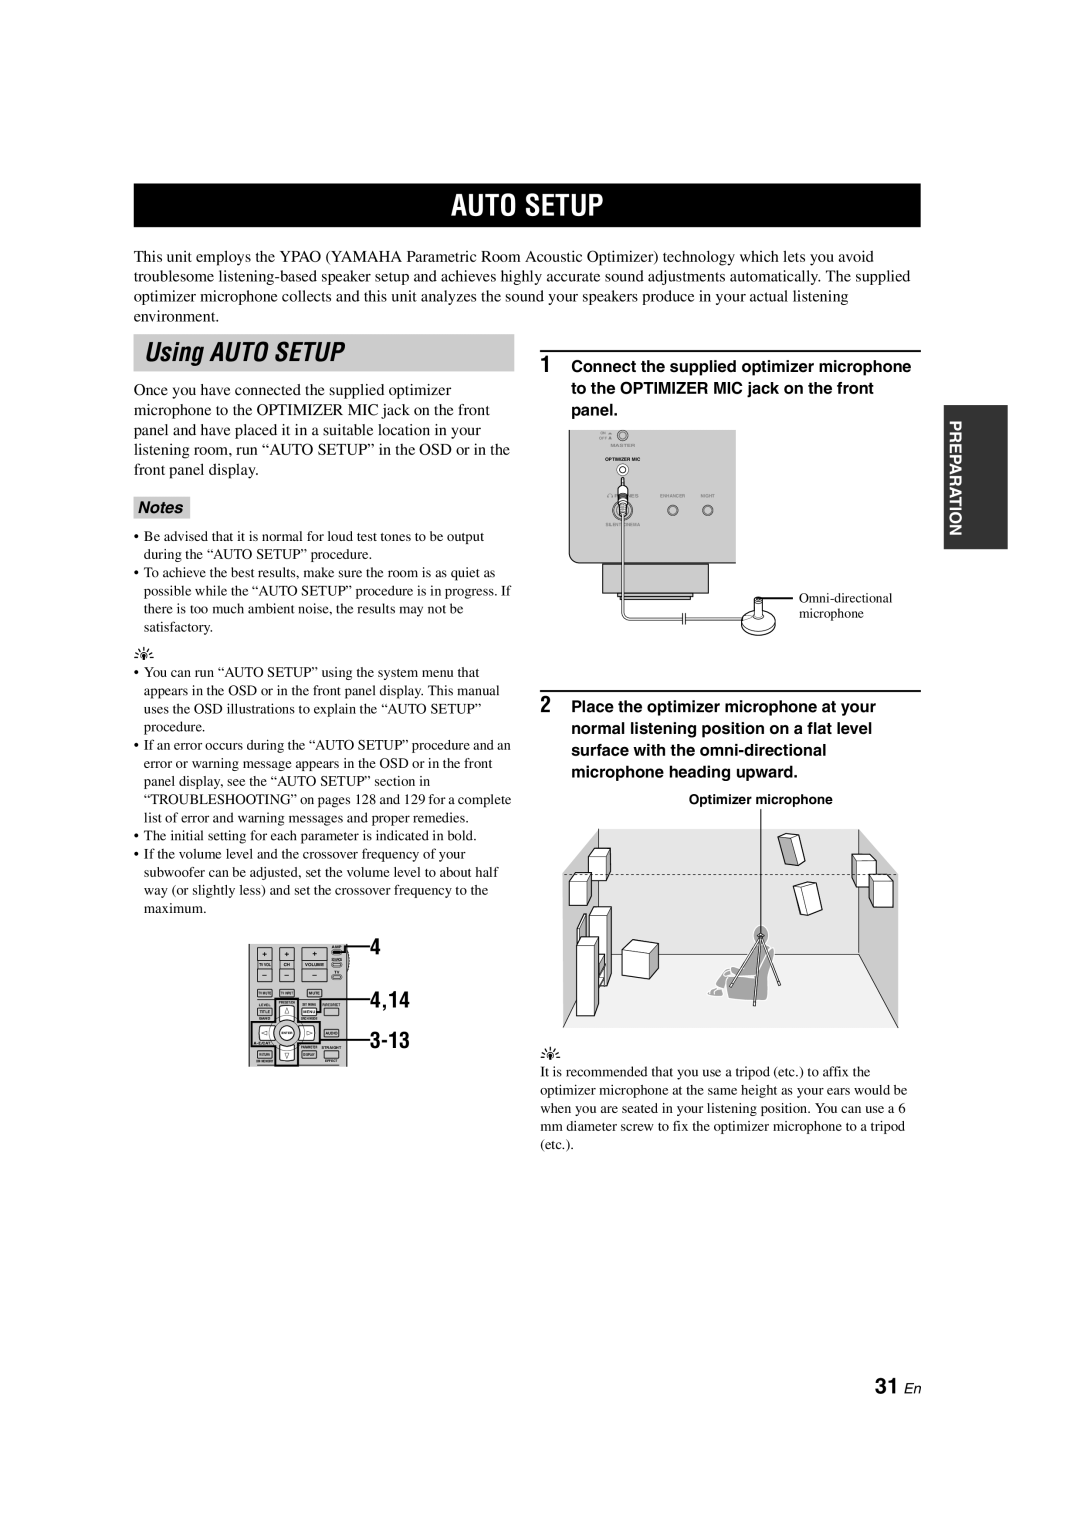 Yamaha HTR-6090 owner manual Auto Setup, Using AUTO SETUP, 4,14, 3-13, 31 En, Notes 